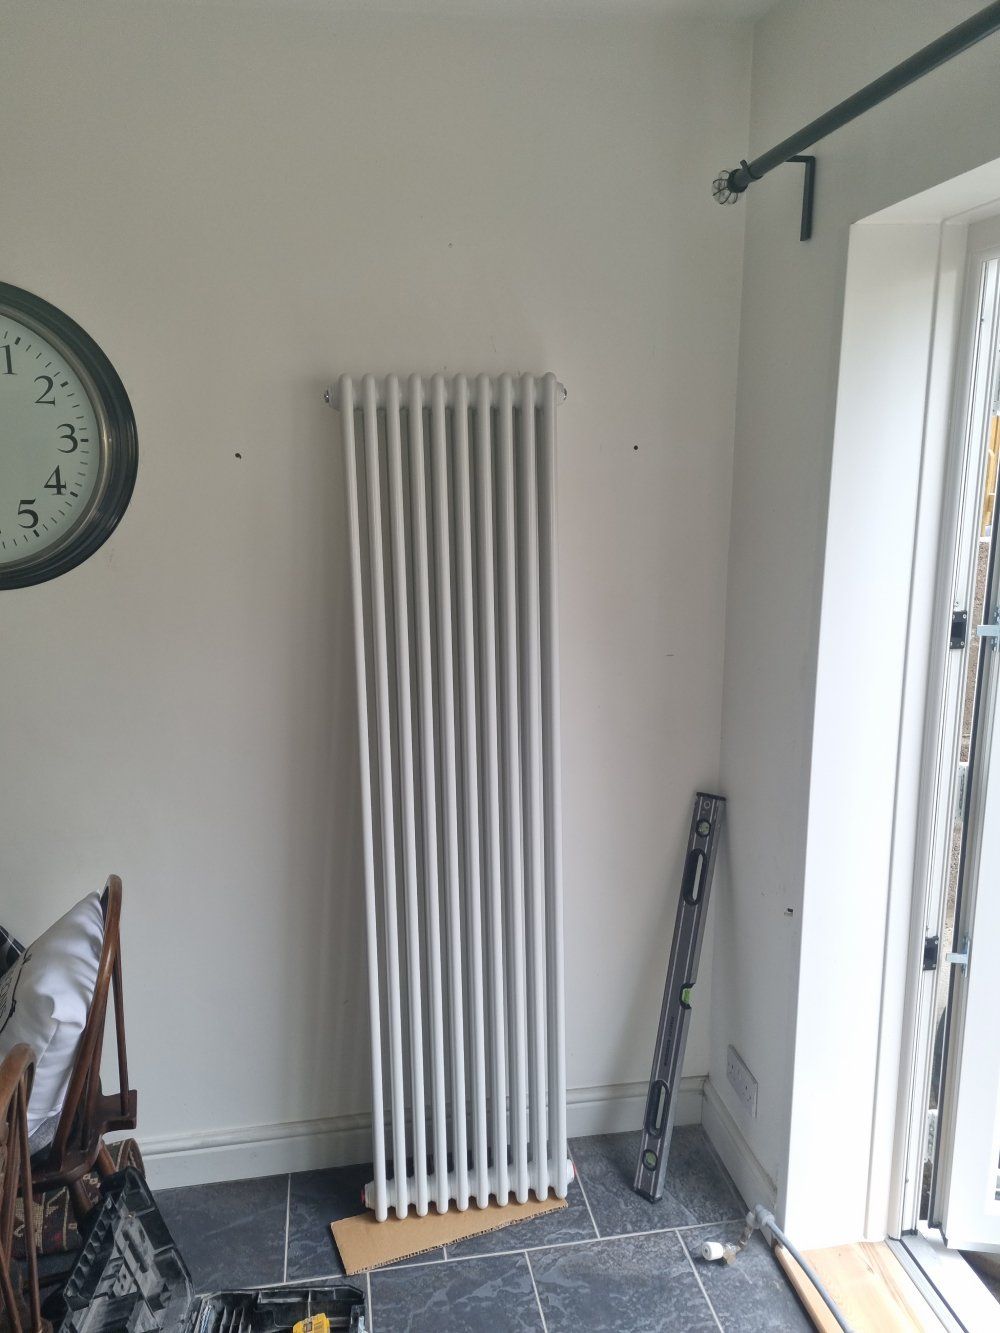 New radiator installed by R Howells Plumbing & Heating